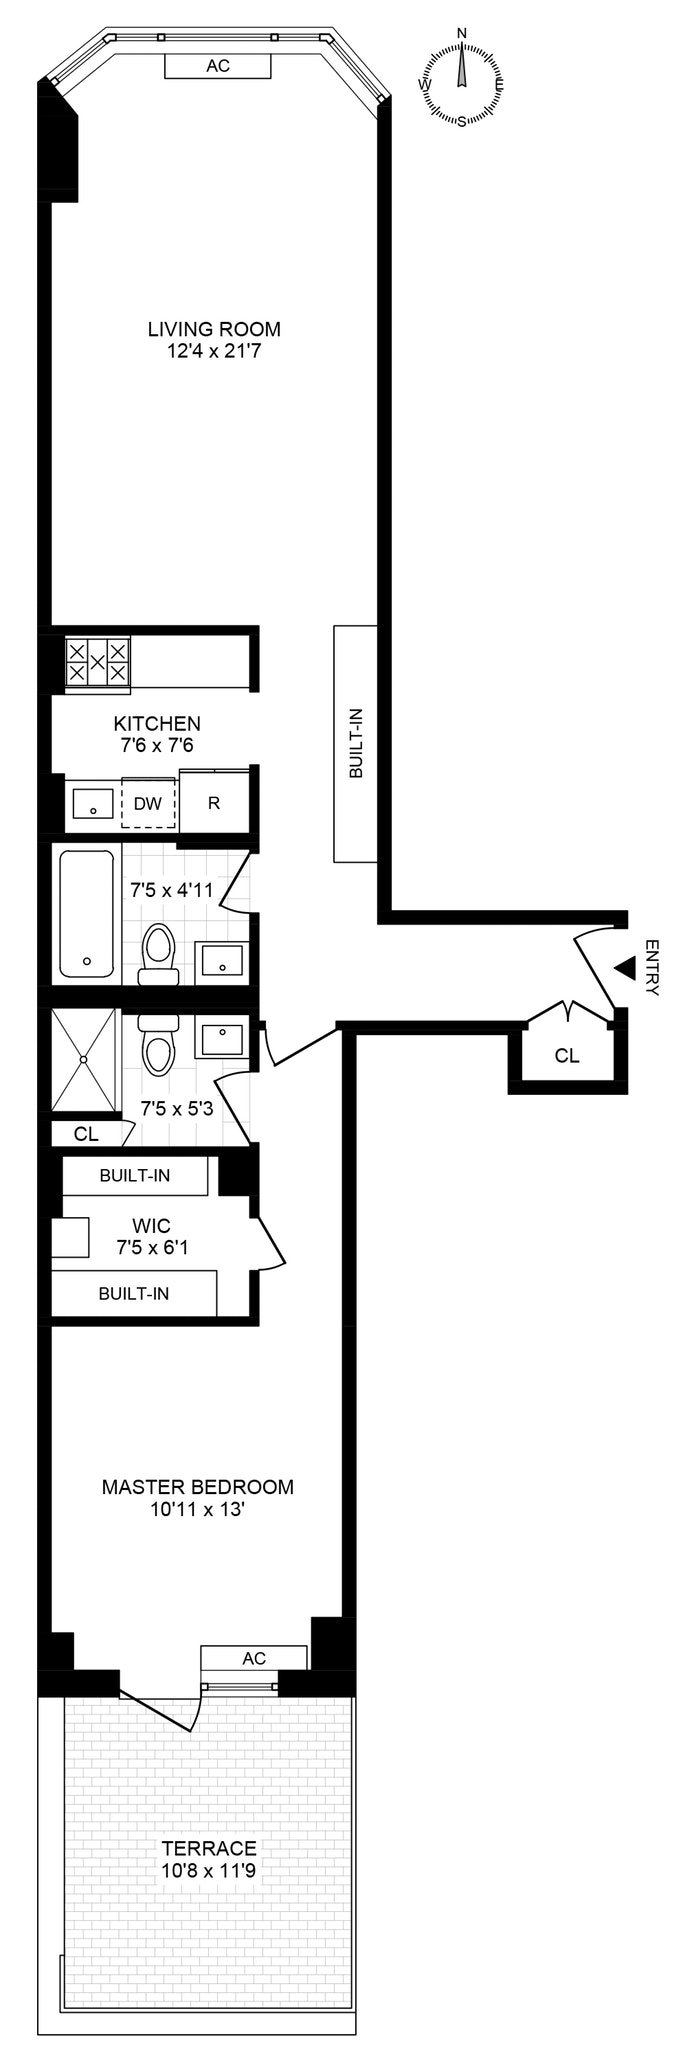 Floorplan for 250 West 89th Street, 2D